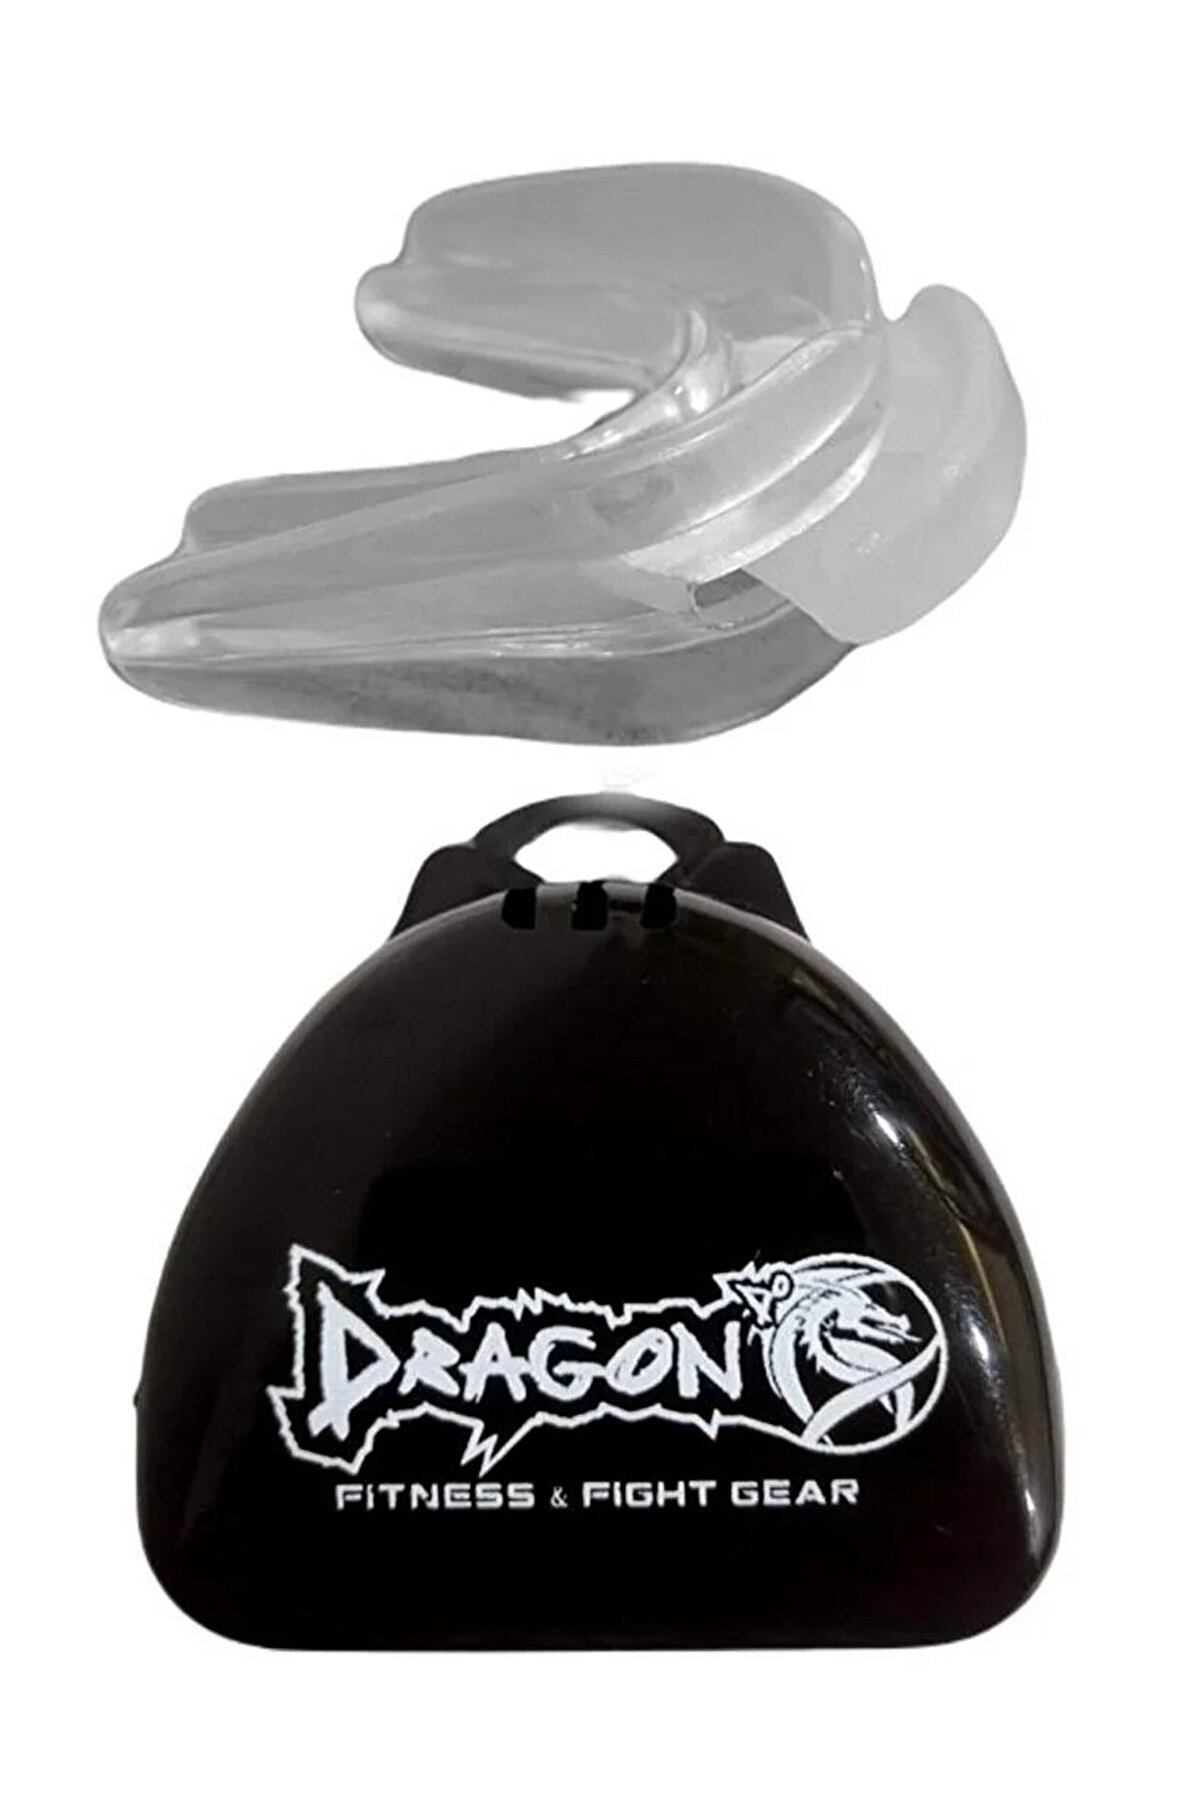 Dragondo Double Şeffaf Dragon Dişlik Profesyonel Çift Damak Dişliği ve Kutusu Premium Mouth Guard